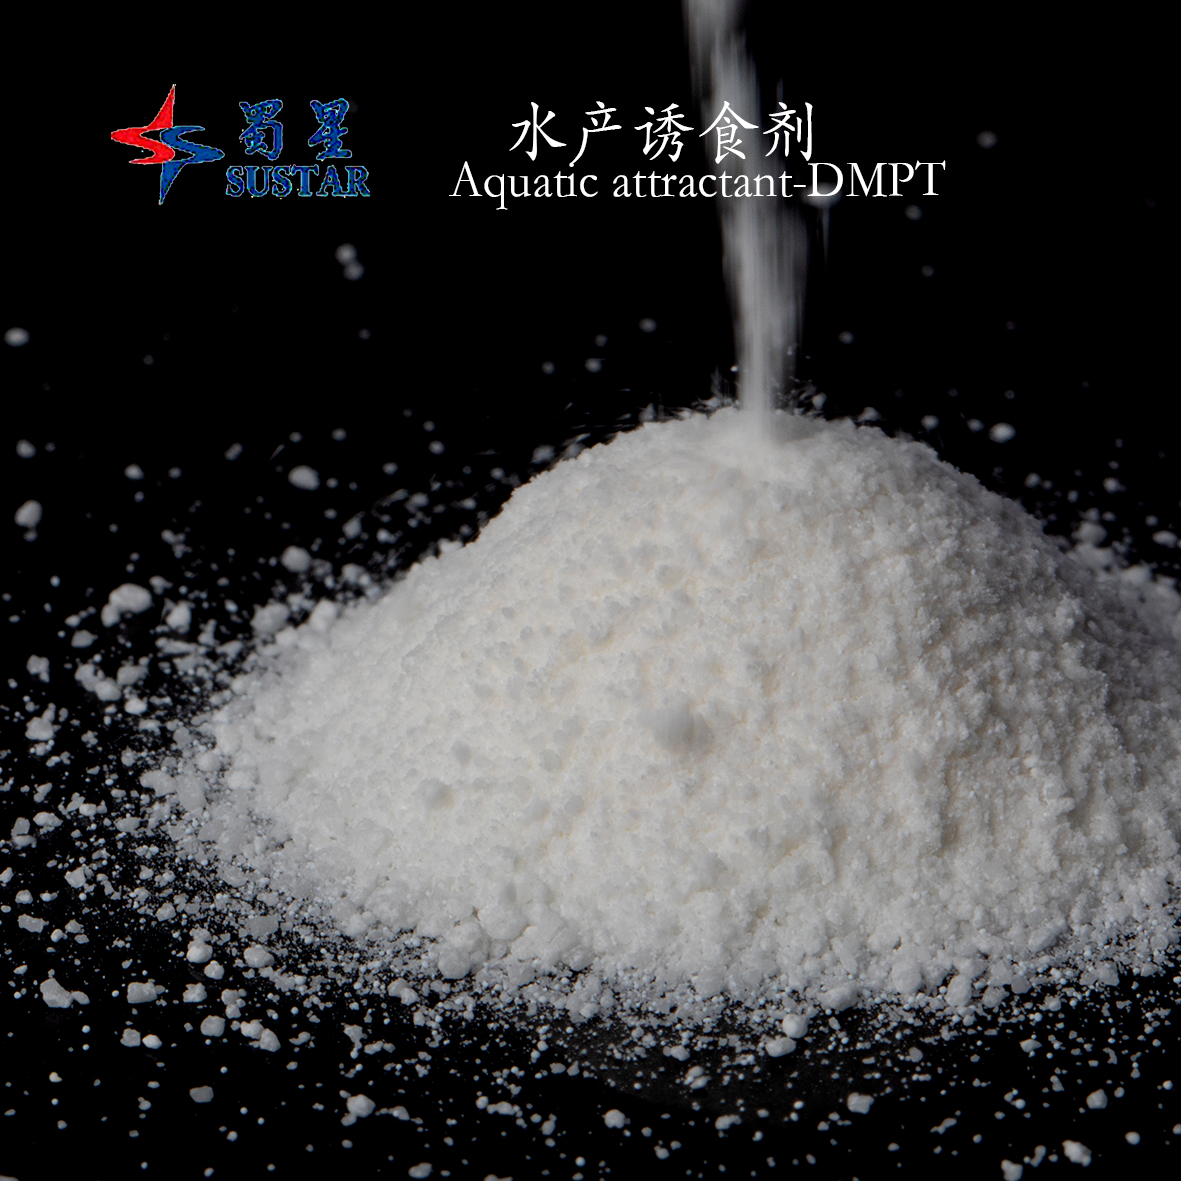 DMPT Dimethyl-Beta-Propiothetin Aquapro Attractant akwatik (2-Carboxyethyl) dimethylsulfonium chloride s,s-Dimethyl-β-propionic asid thetine White Crystalline Powder